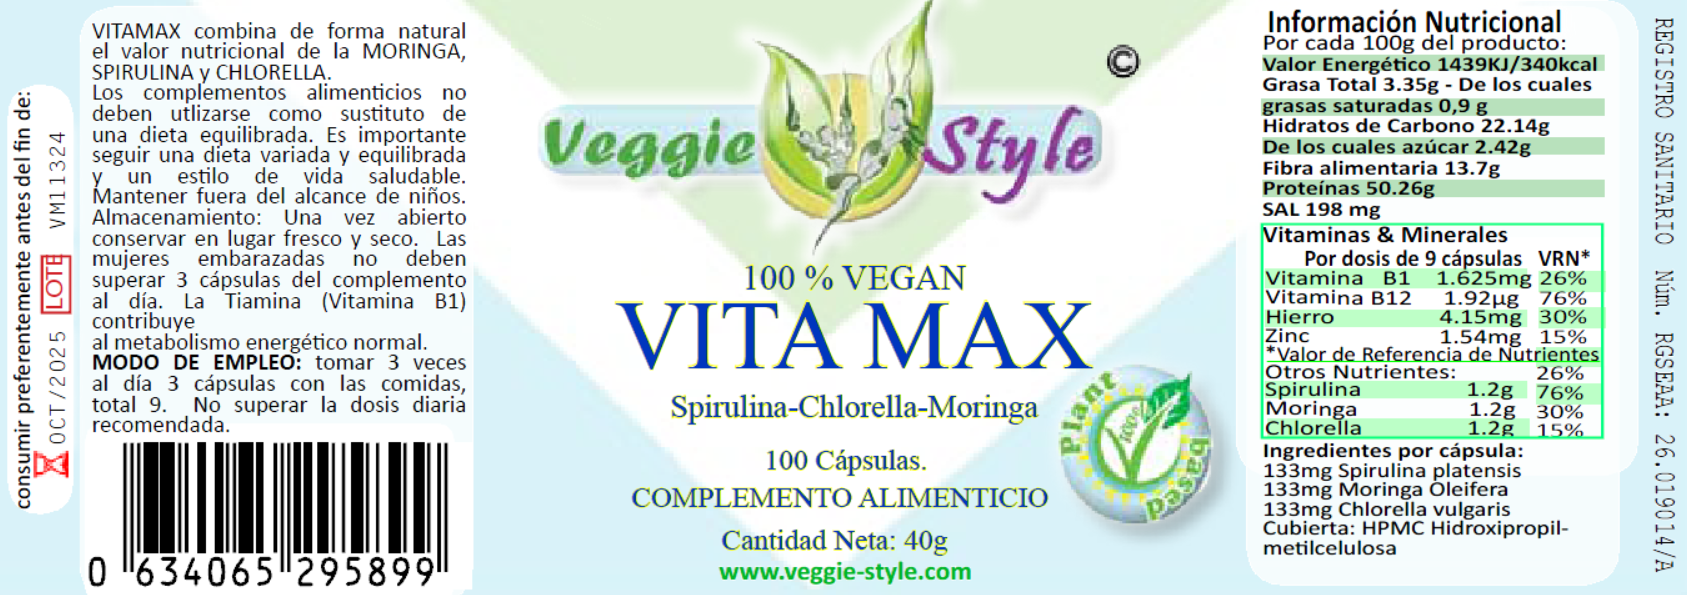 Veggie-Style-VitaMax-Spirulina-Chlorella-Moringa